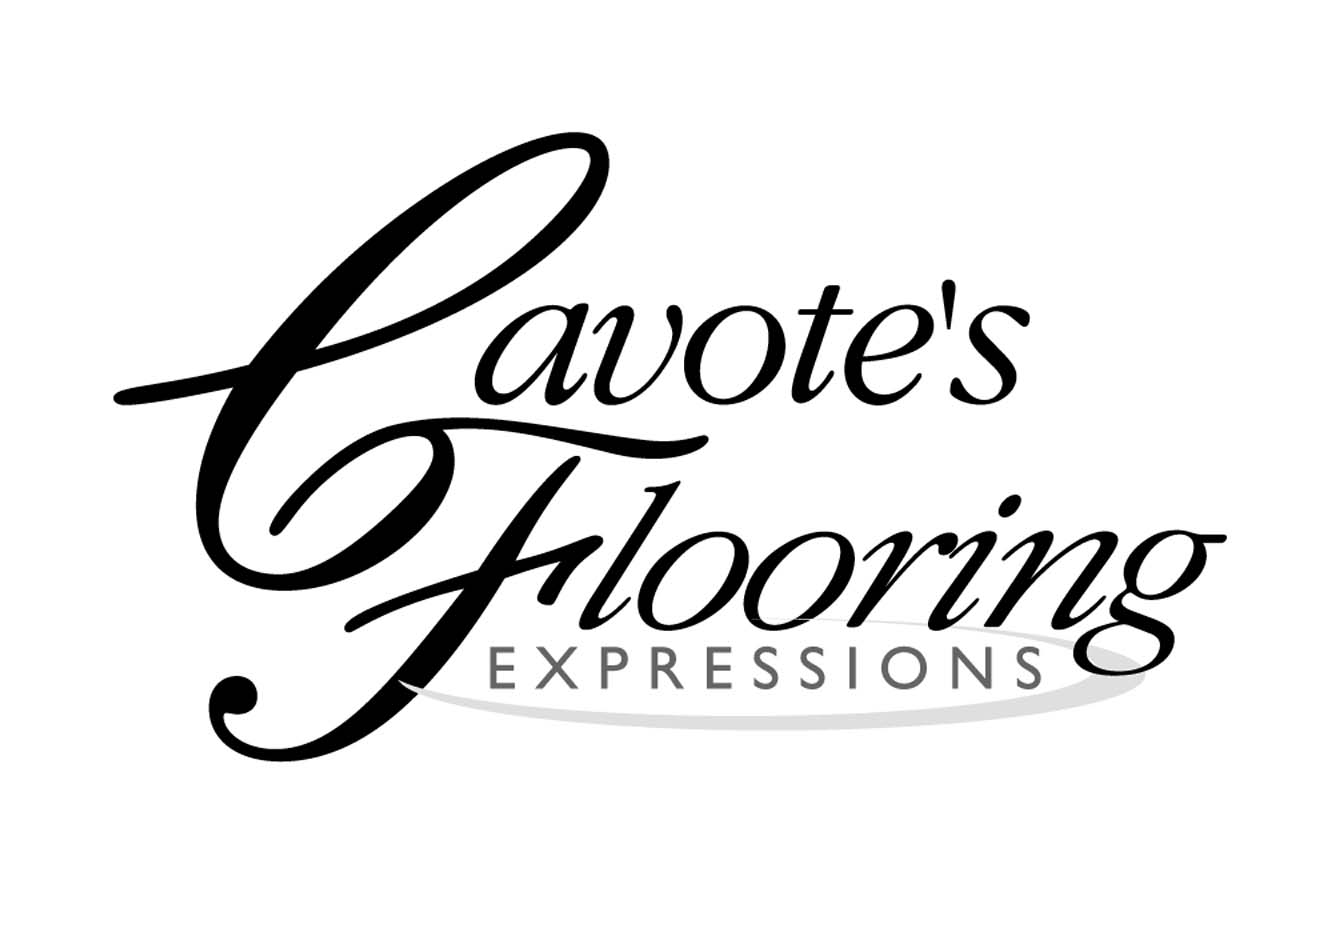 Cavote's Flooring Expressions Logo